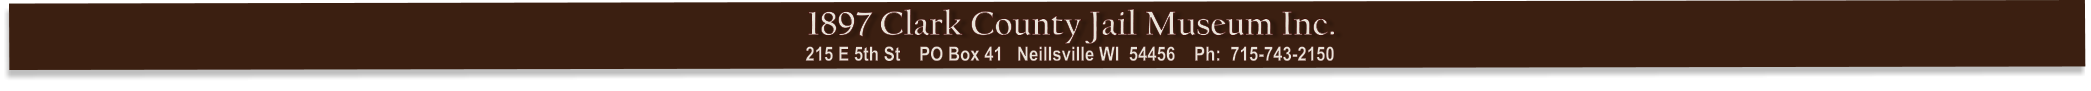 215 E 5th St    PO Box 41   Neillsville WI  54456    Ph:  715-743-2150   1897 Clark County Jail Museum Inc.